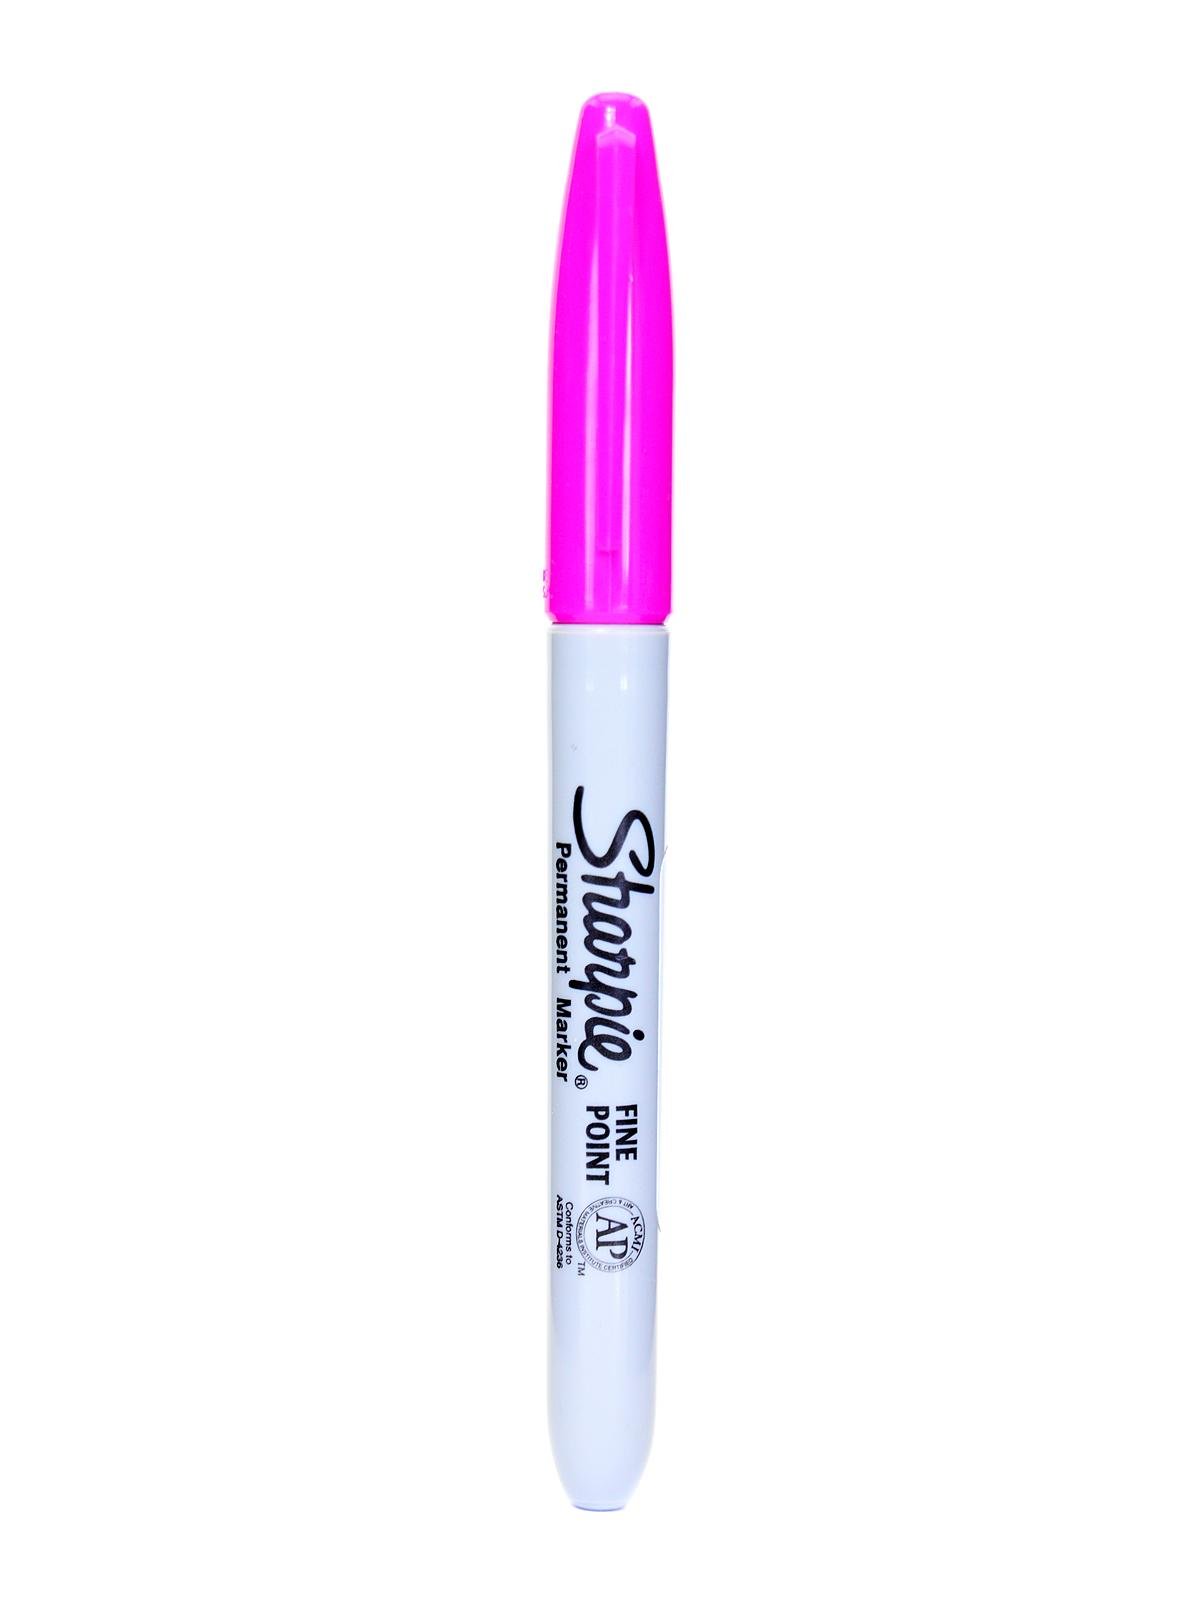 Sharpie Pen - Fine Point - Fine Pen Point - Black, Blue, Turquoise, Green,  Clover, Orange, Hot Pink, Red, Purple, Coral - Black Barrel - 12 / Pack -  Thomas Business Center Inc